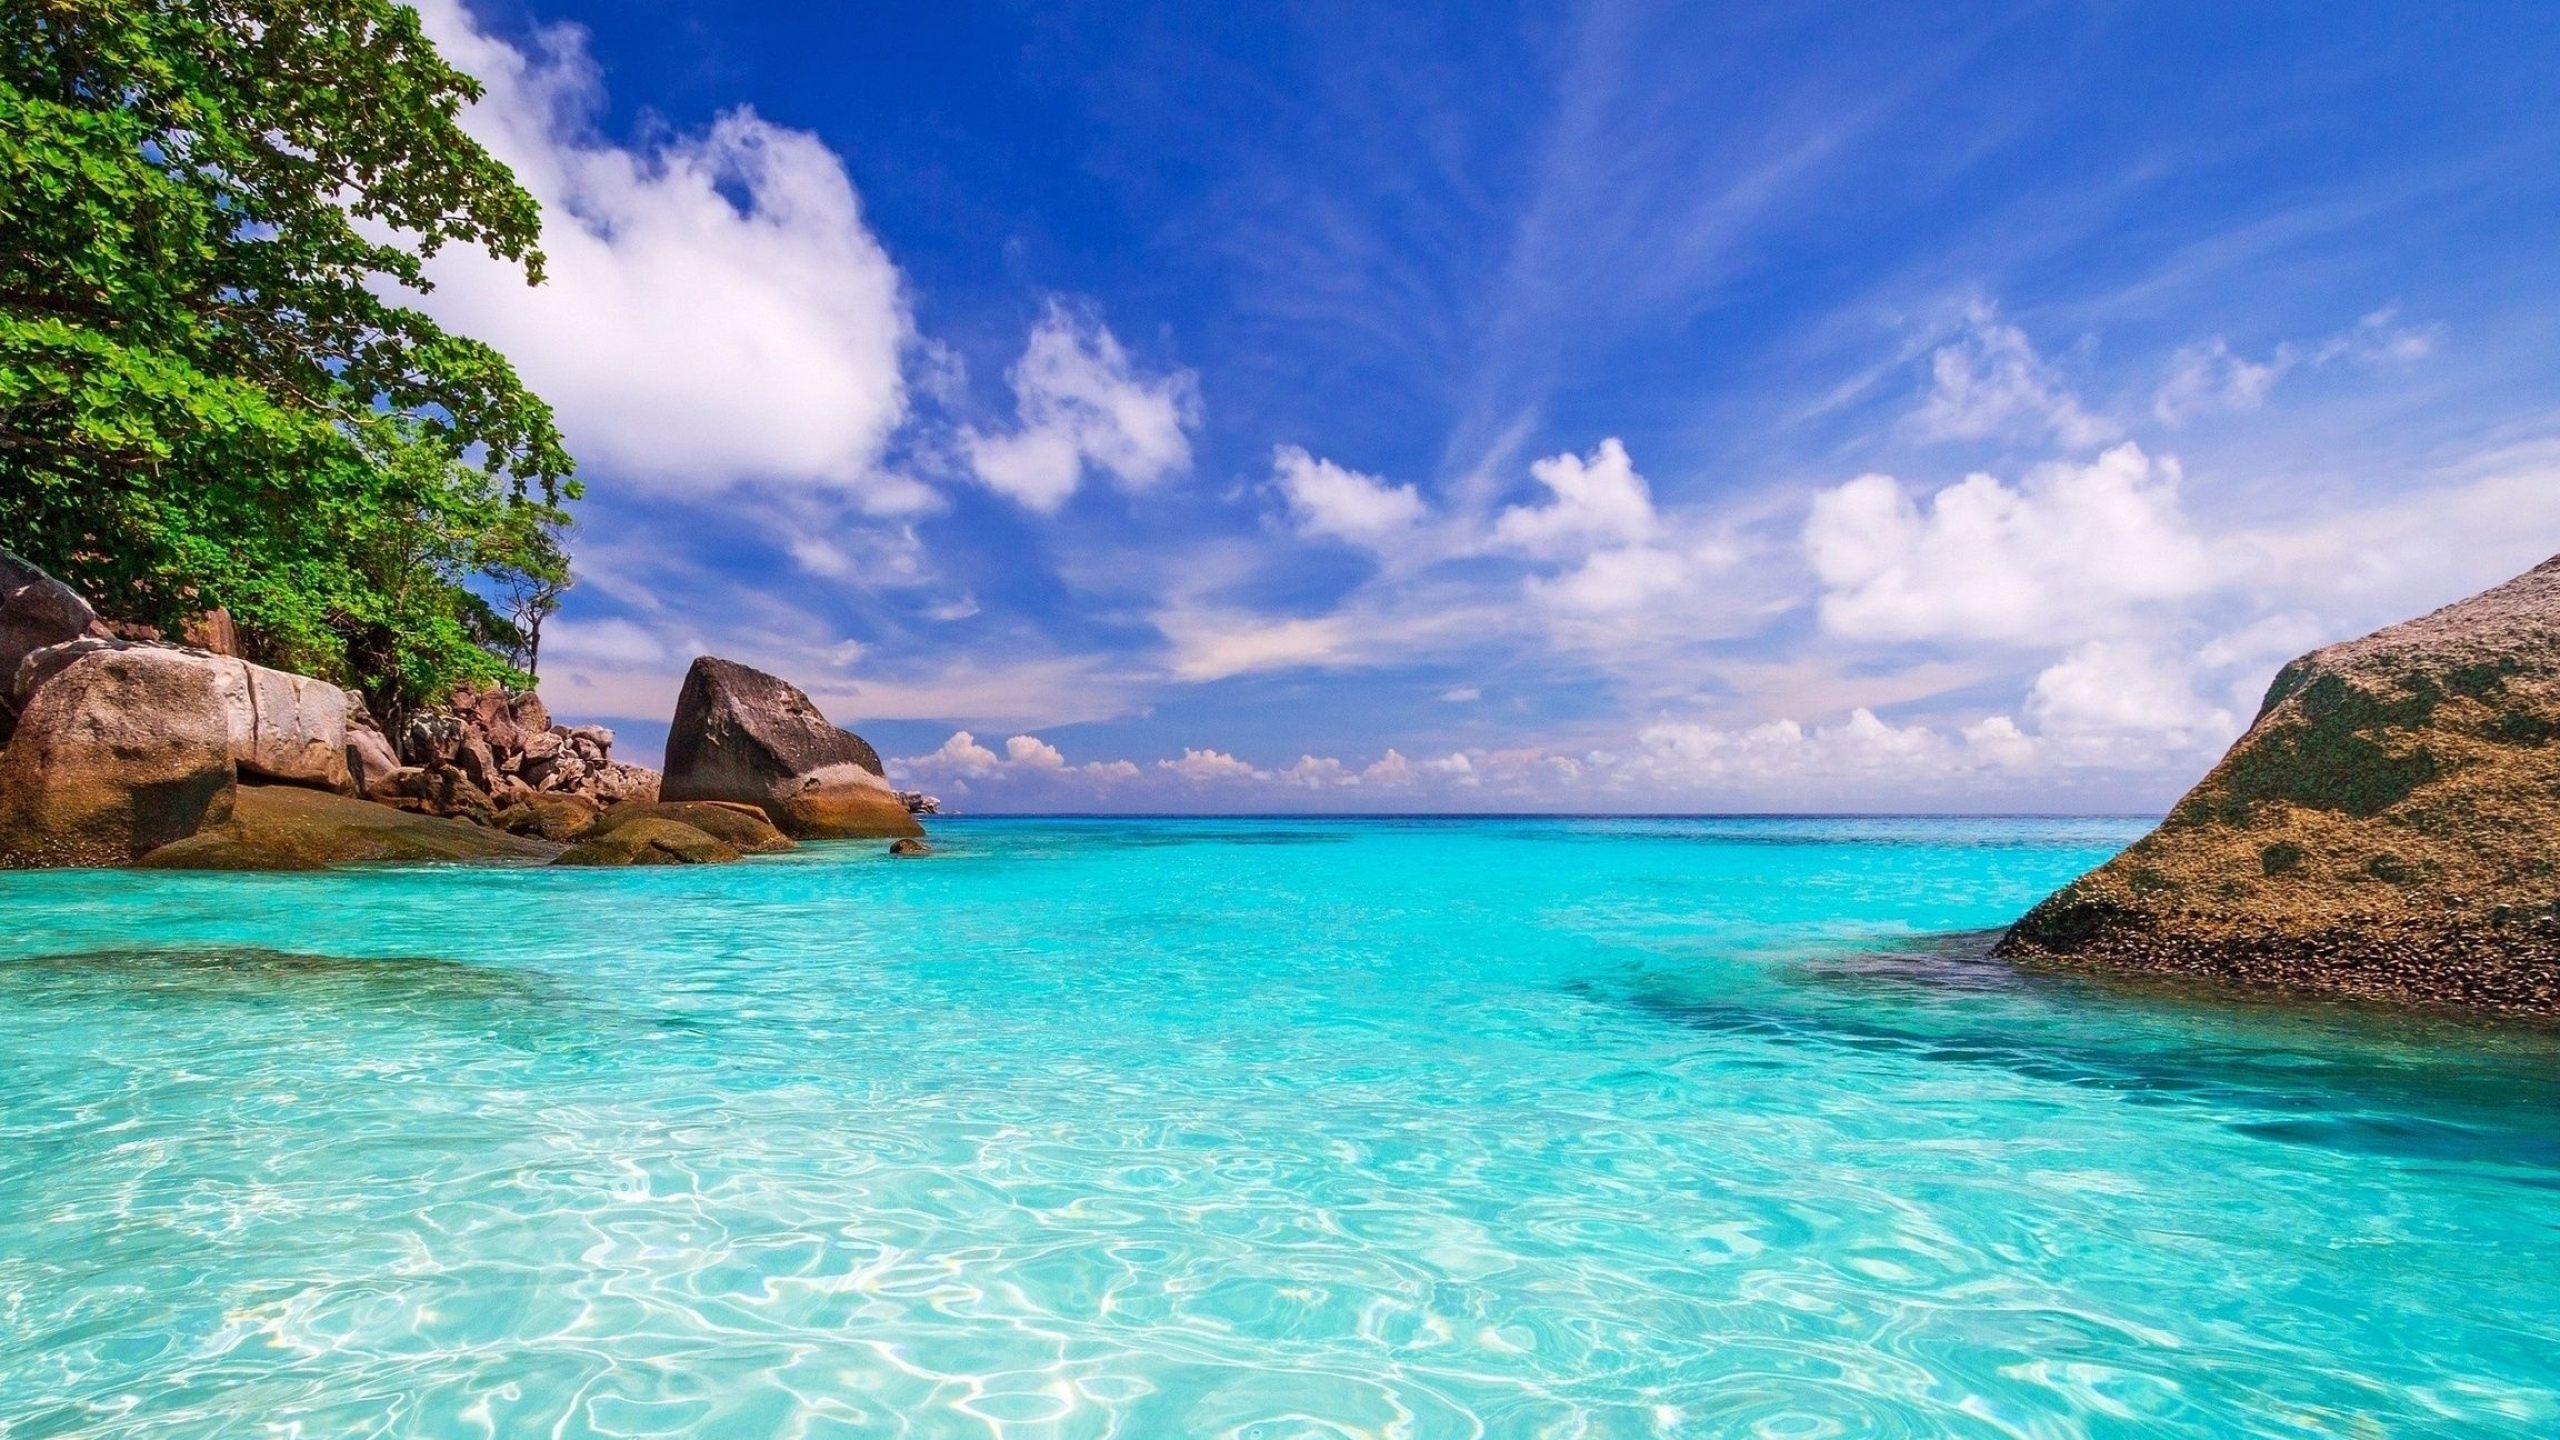 Mauritius, Ultra HD beach wallpapers, Beach bliss, Screensaver paradise, 2560x1440 HD Desktop